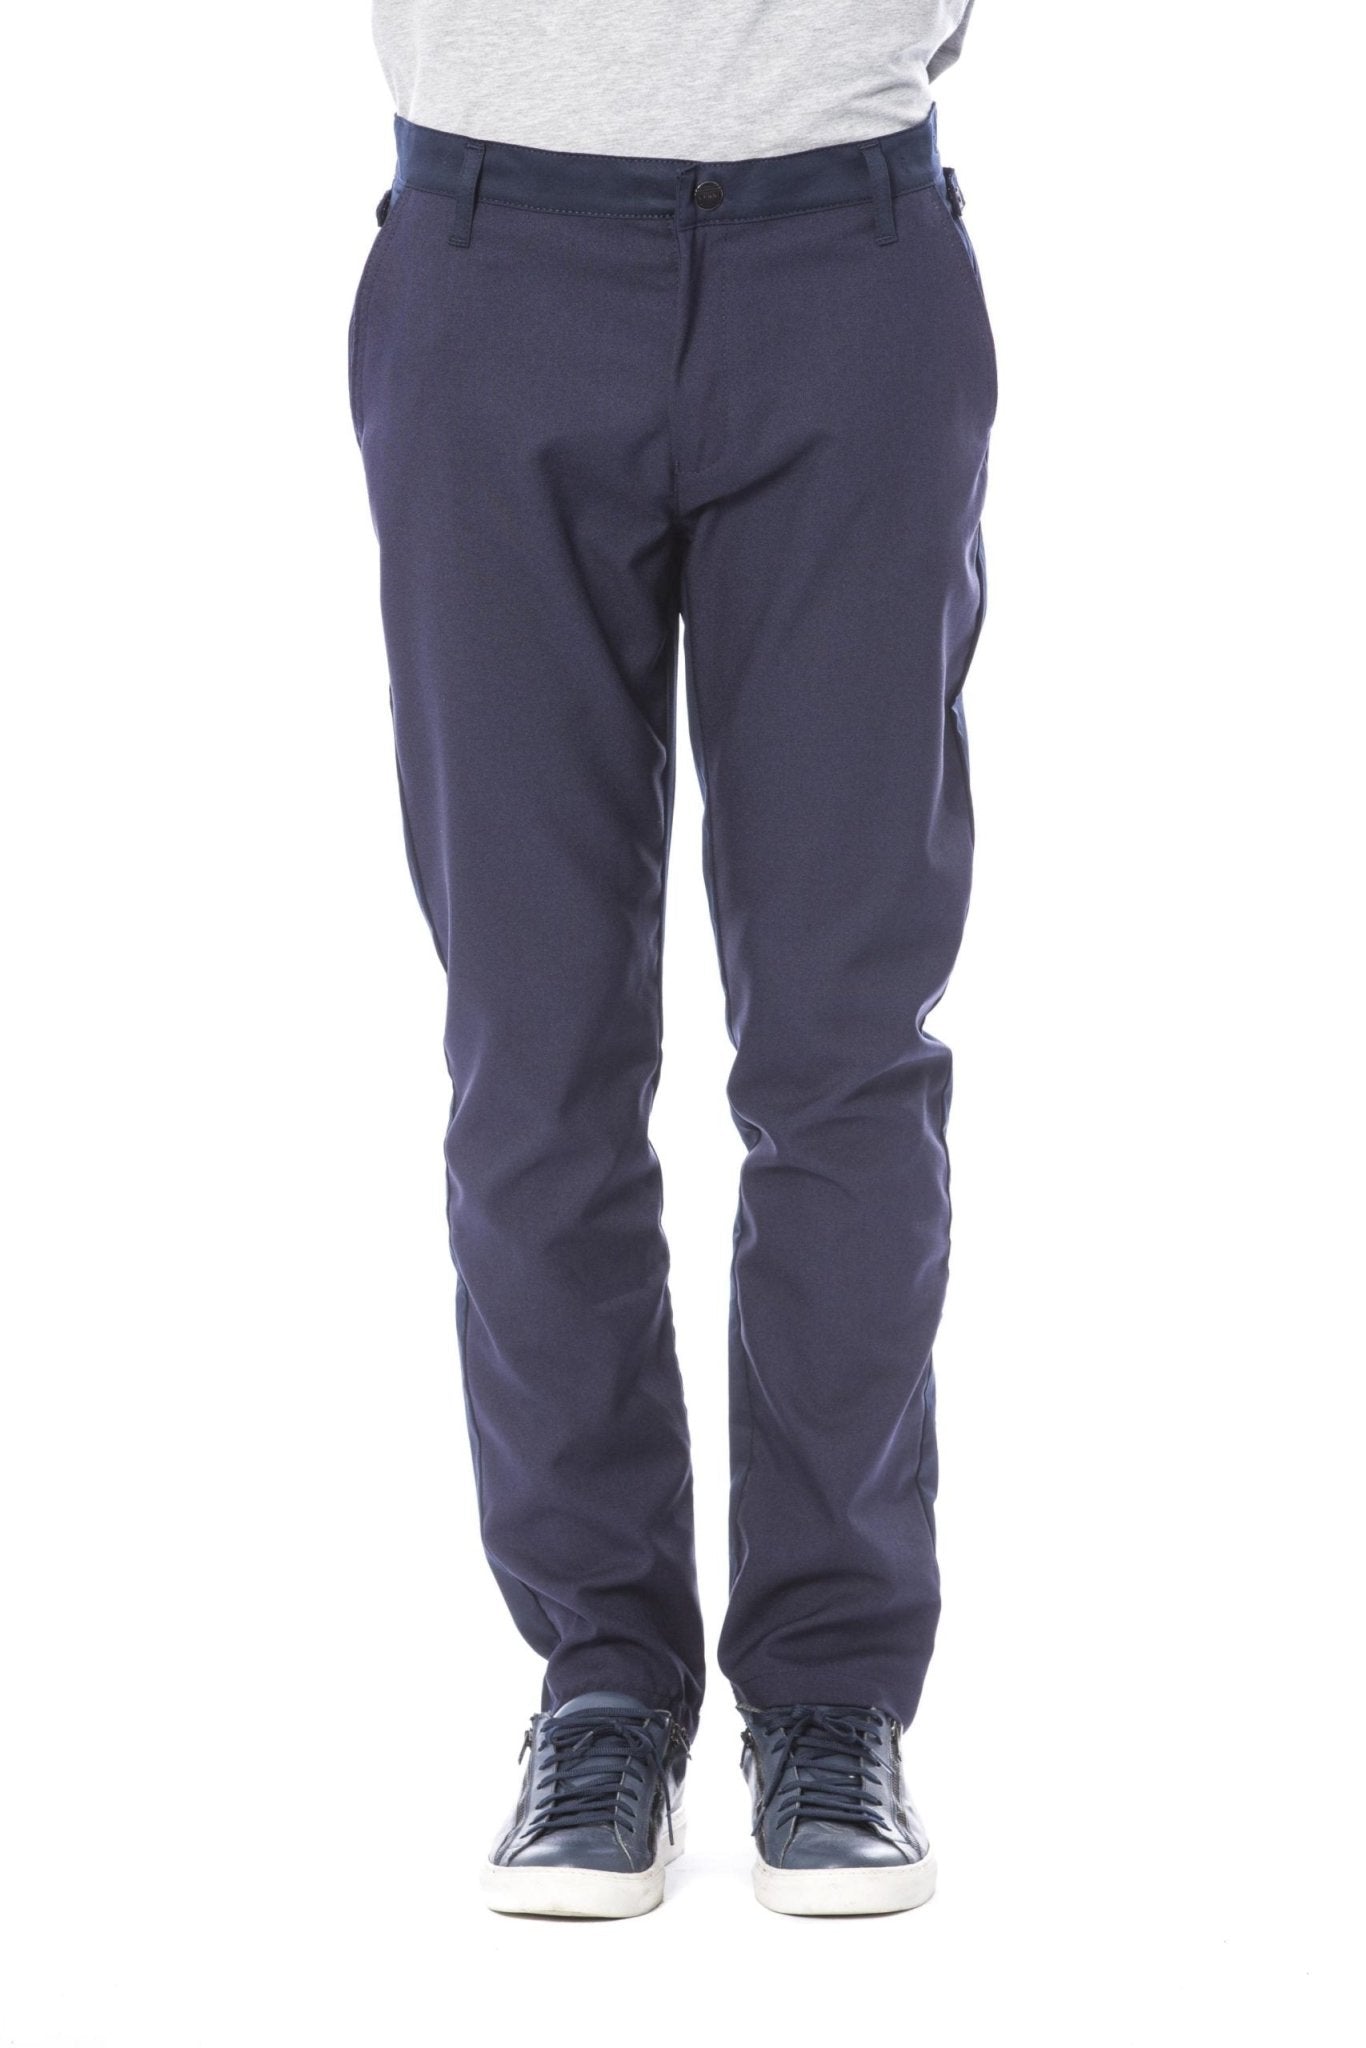 Verri Blue Polyester Jeans & Pant - Fizigo